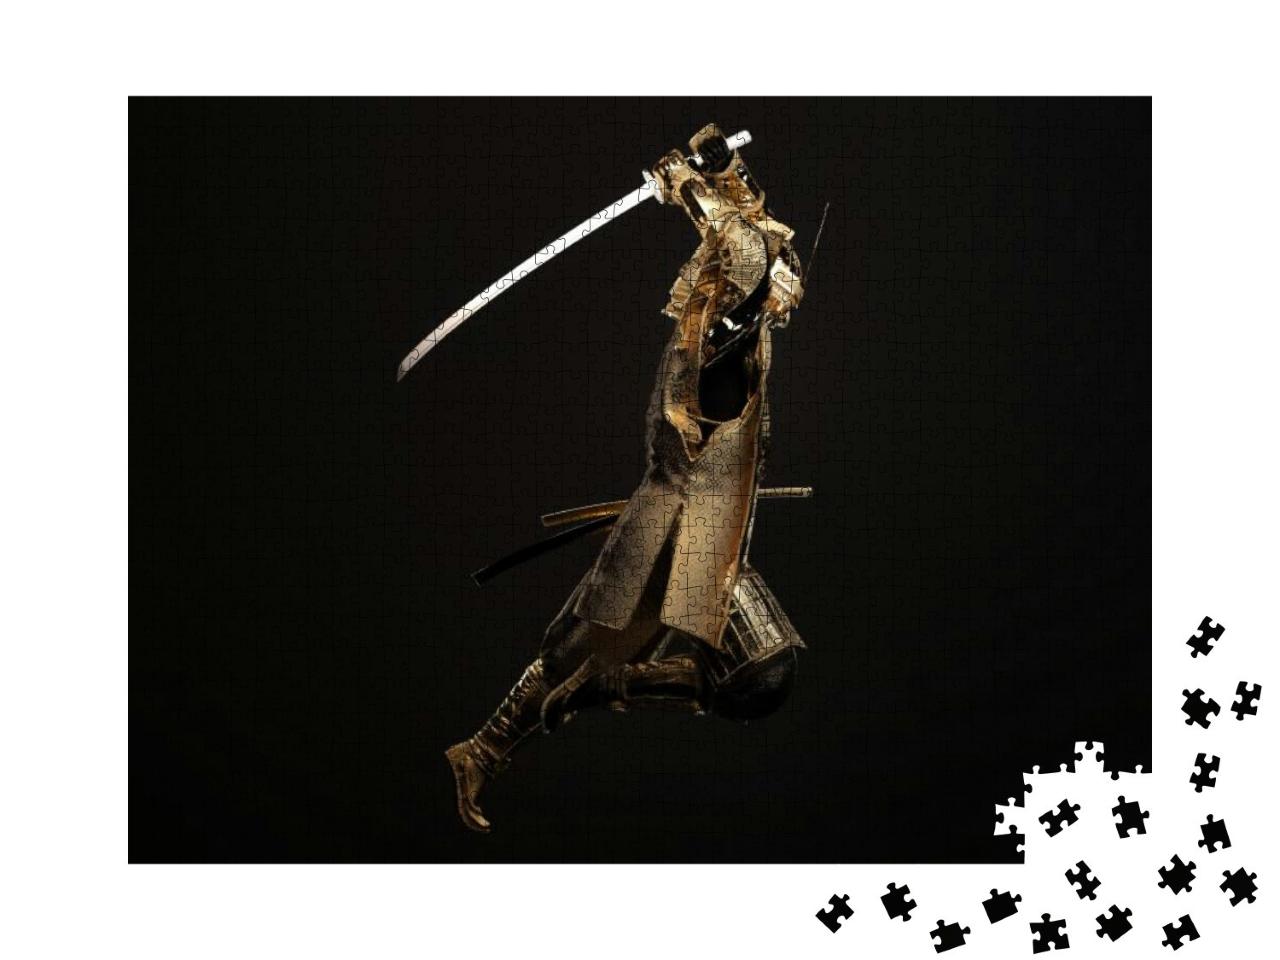 Full Body of a Golden Samurai Wielding a Sword on Dark Ba... Jigsaw Puzzle with 1000 pieces